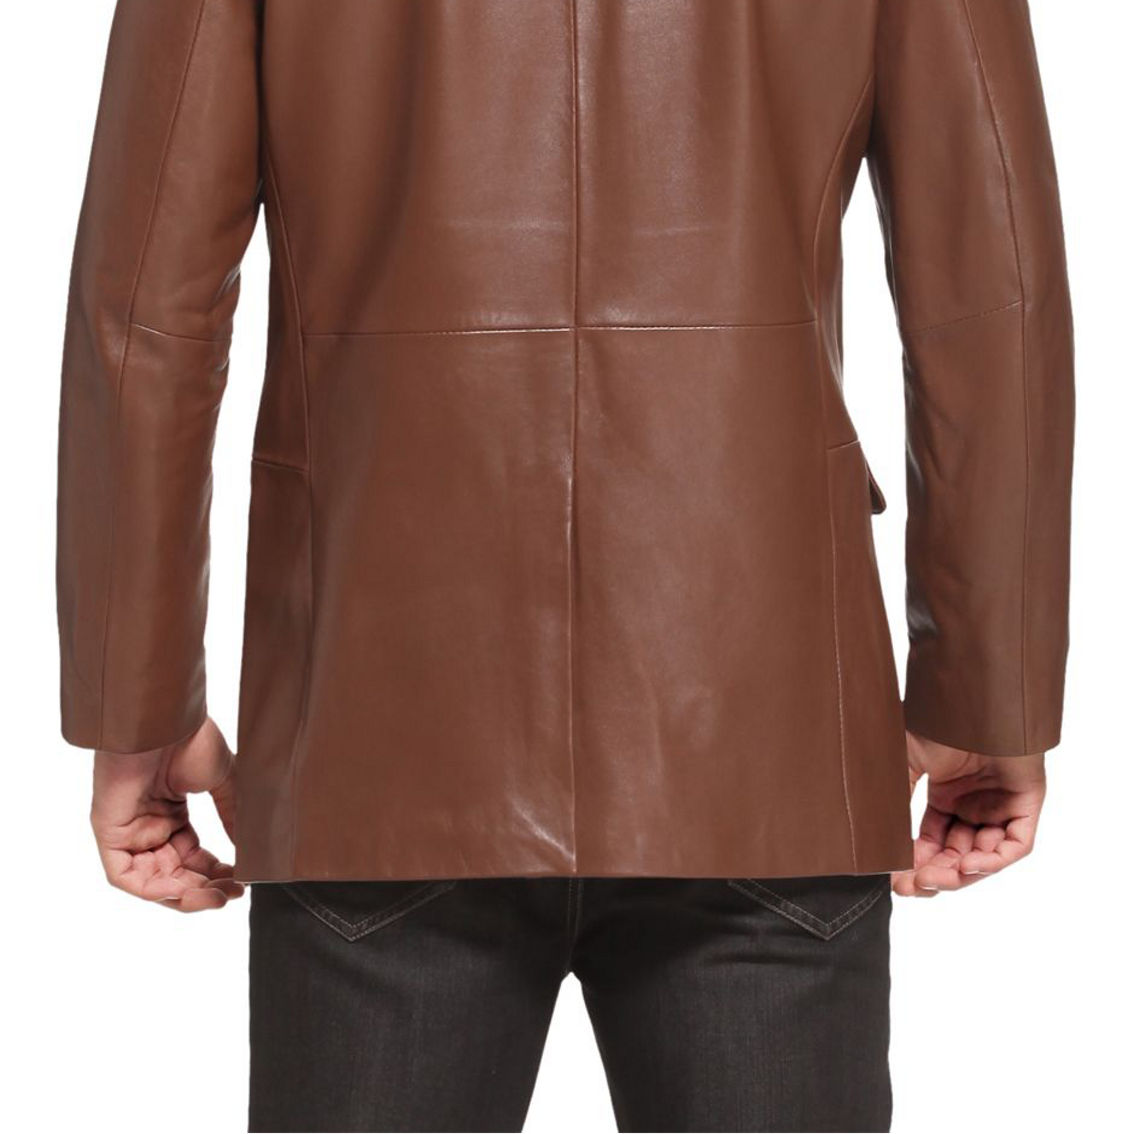 BGSD Men Classic Two-Button Lambskin Leather Blazer - Regular & Tall - Image 4 of 4